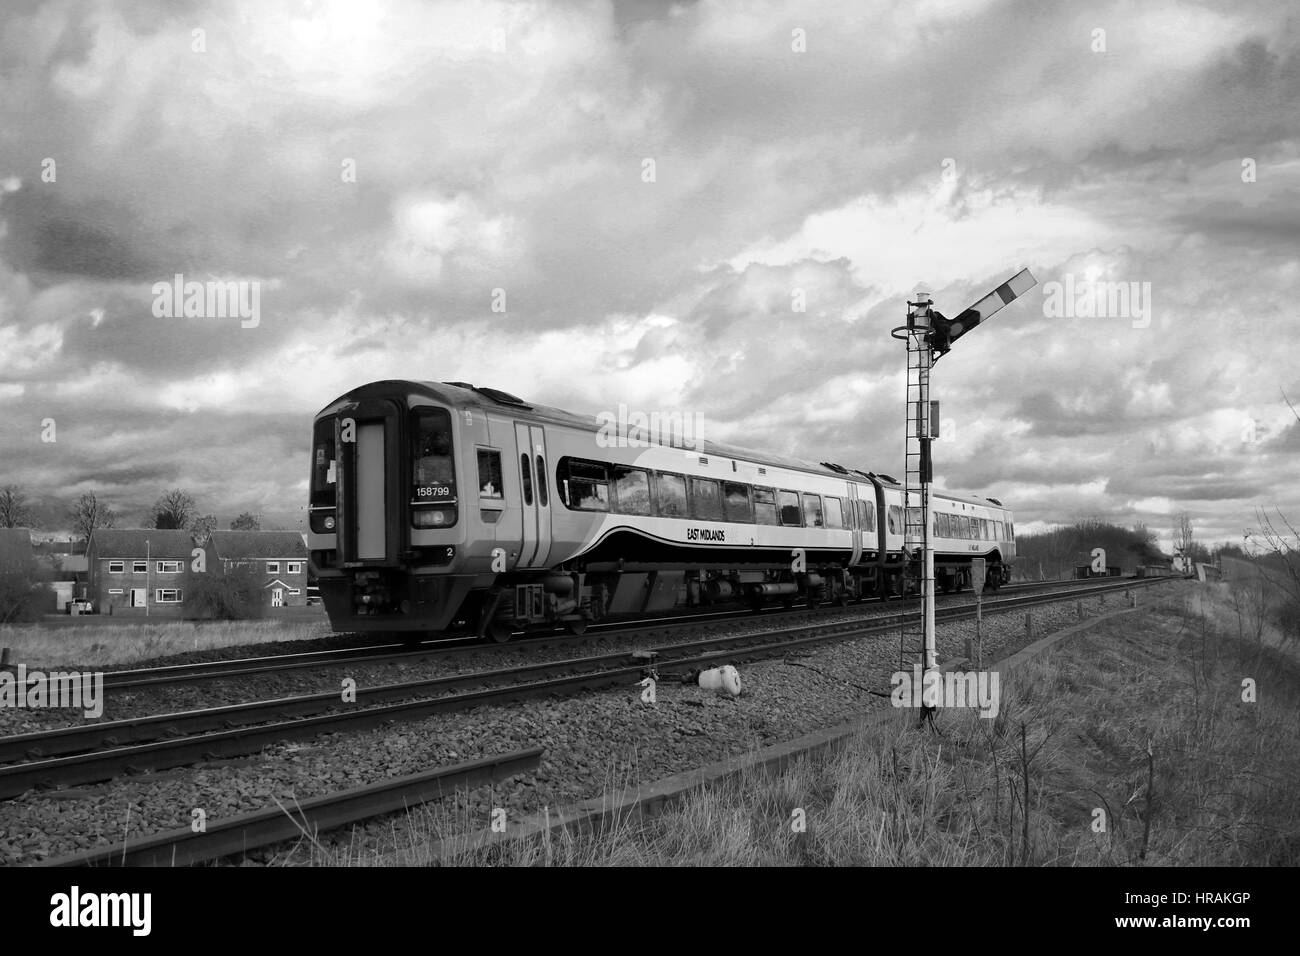 East Midlands treni, 158799 passando un livello senza equipaggio crossing, whittlesey town, fenland, Cambridgeshire, Inghilterra. Foto Stock